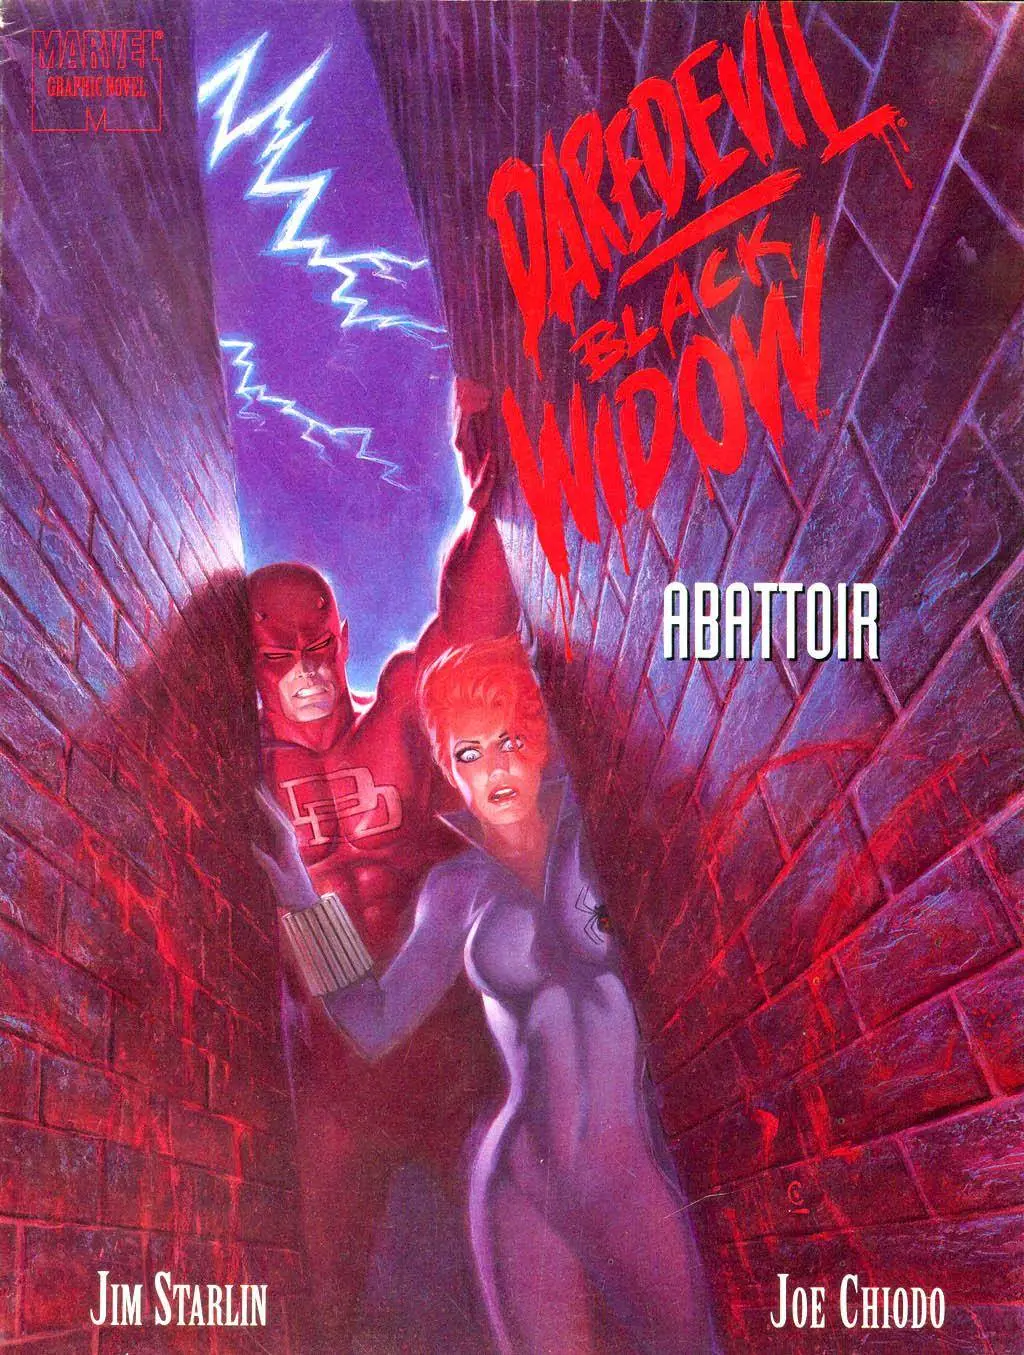 Marvel Graphic Novel 75 -Daredevil Black Widow - Abattoir 1993